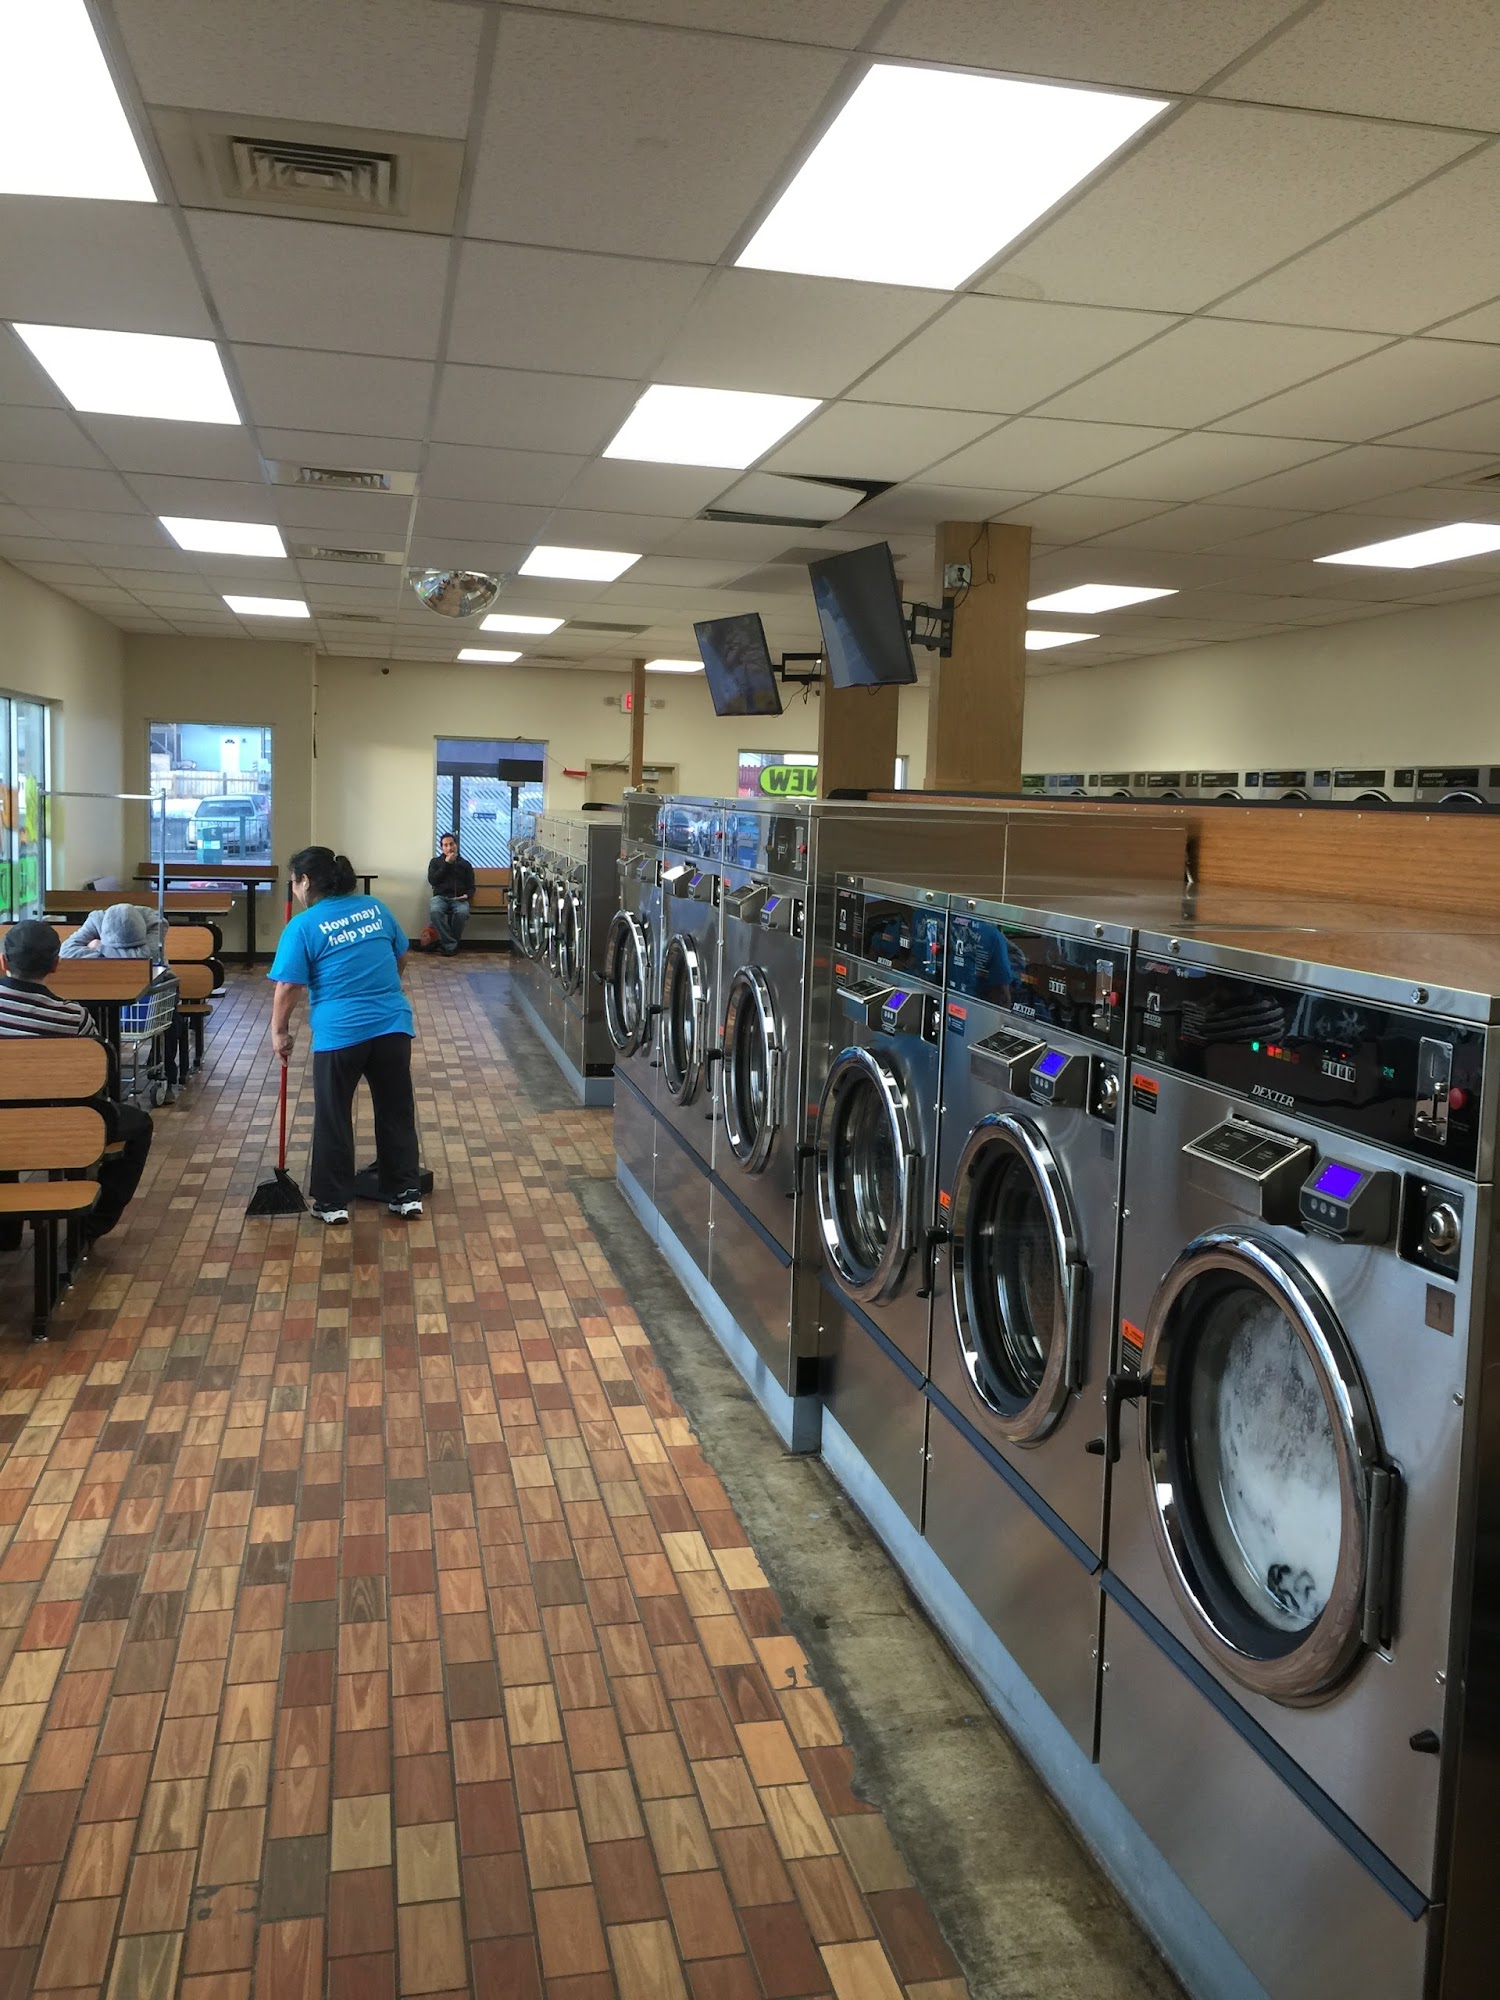 Lake Street Laundromat, with big washers & fresh hamburgers, and chicken sandwiches